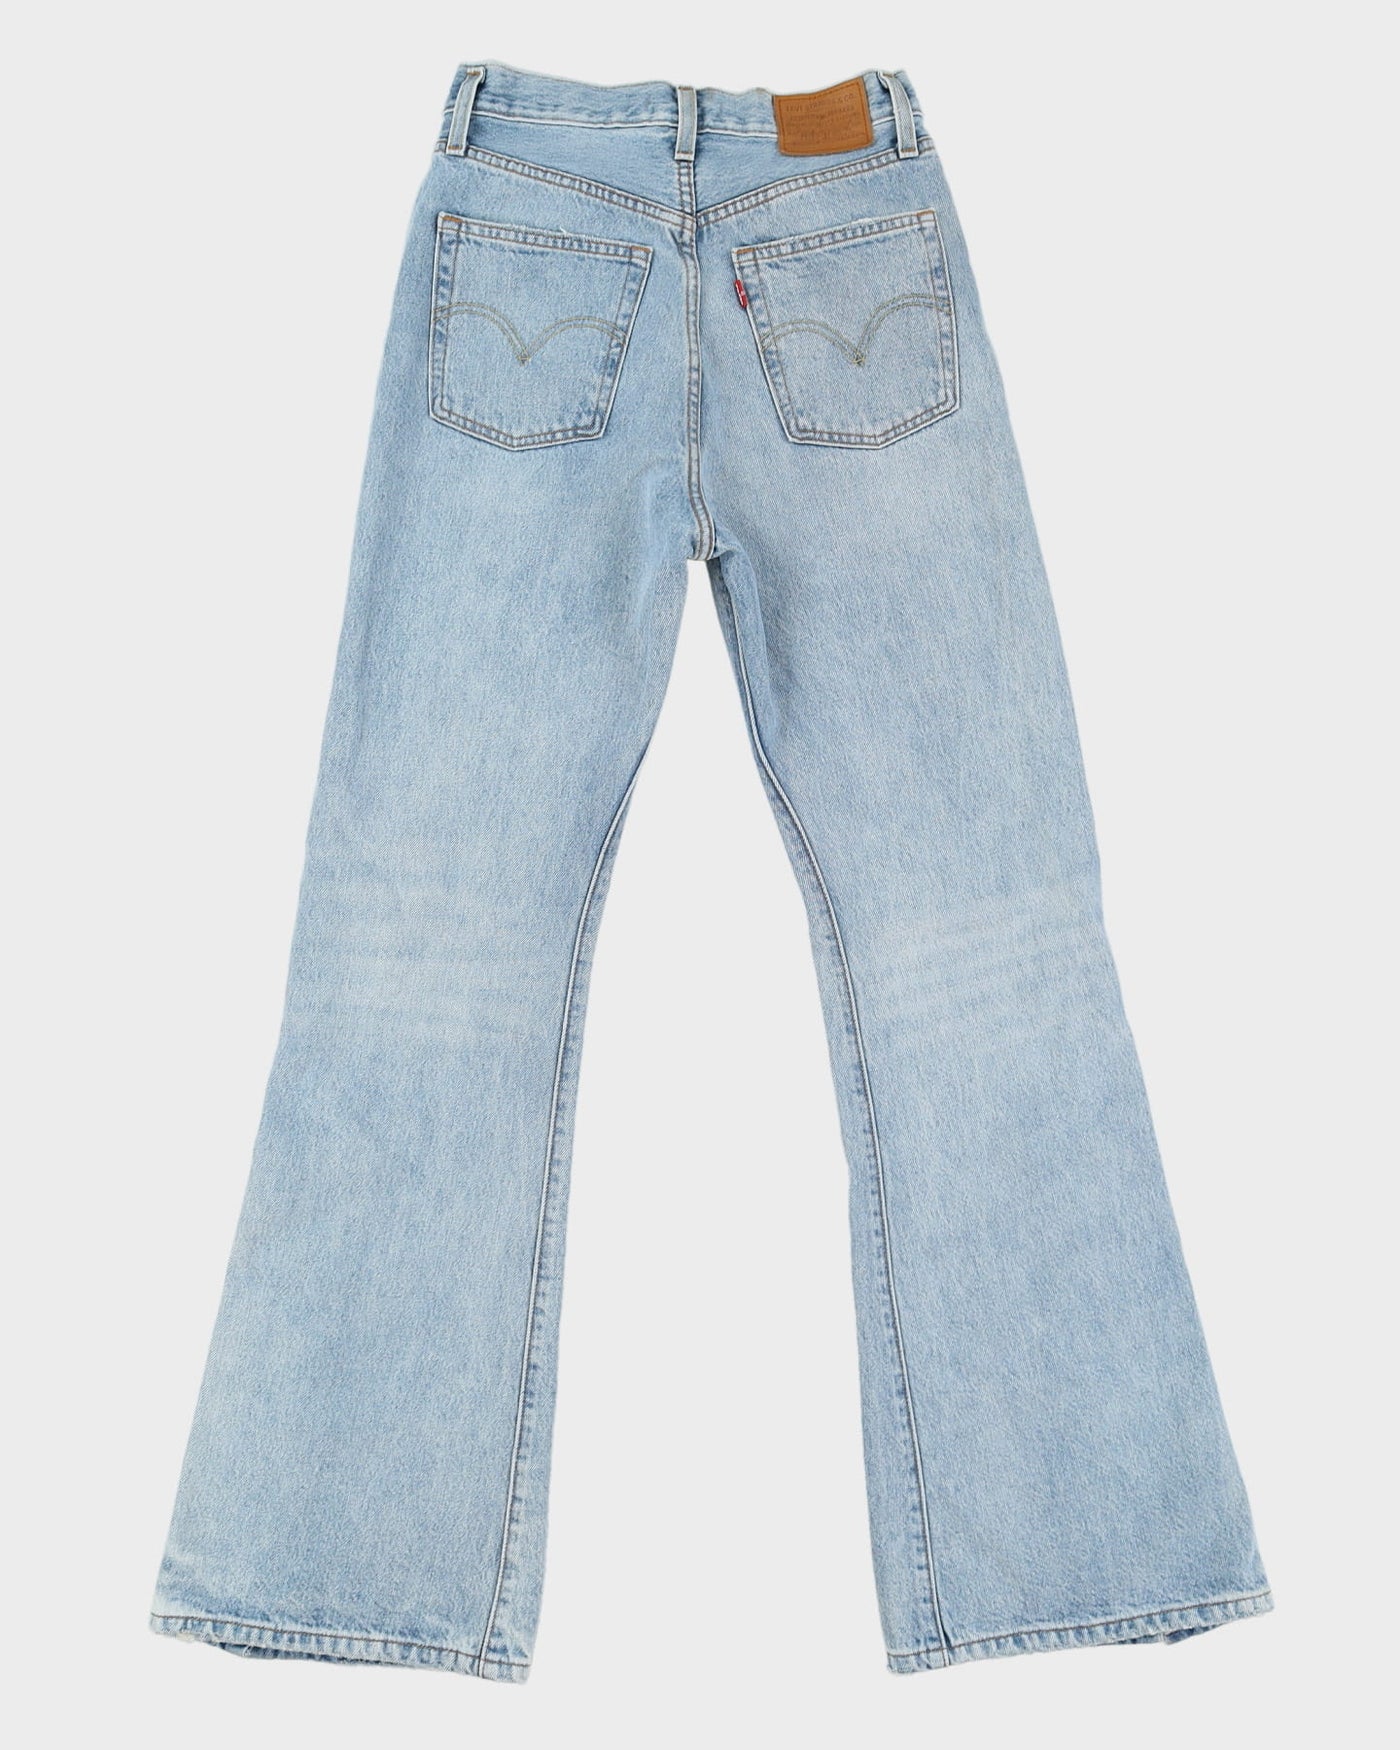 Levi's 501 Big E Blue Light Wash Jeans - W26 L32